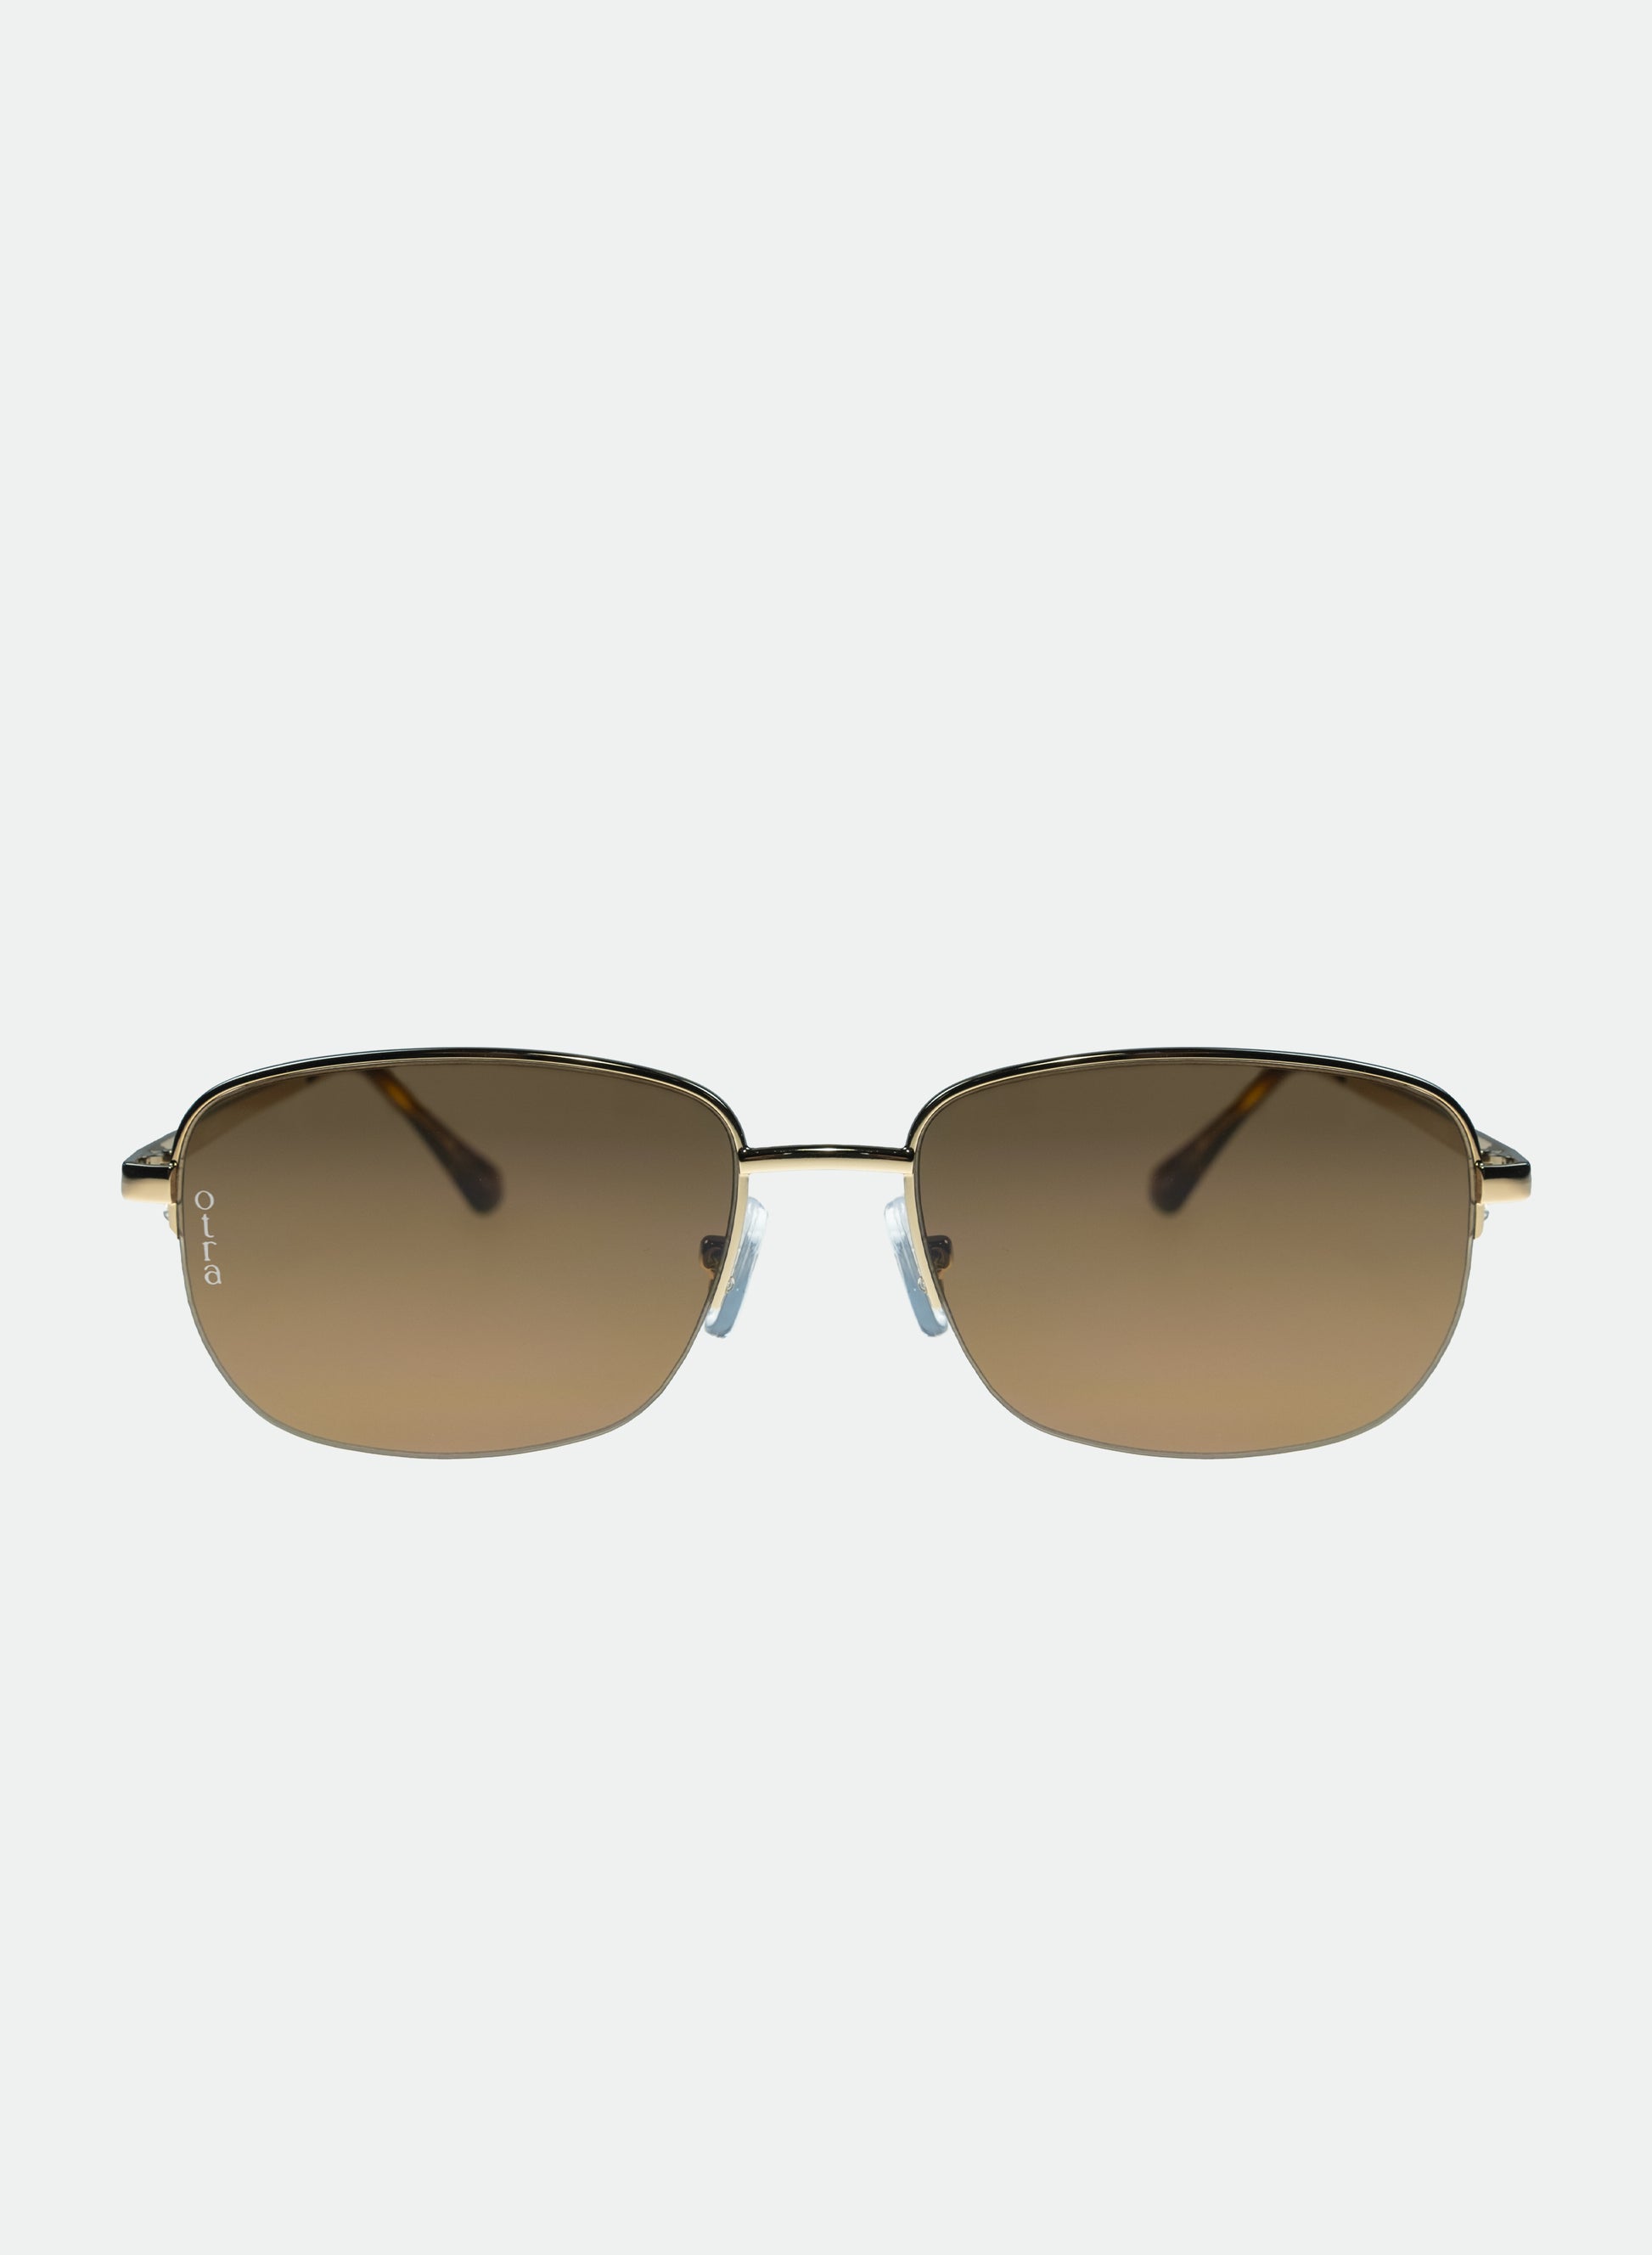 Junior metal frame sunglasses in gold 